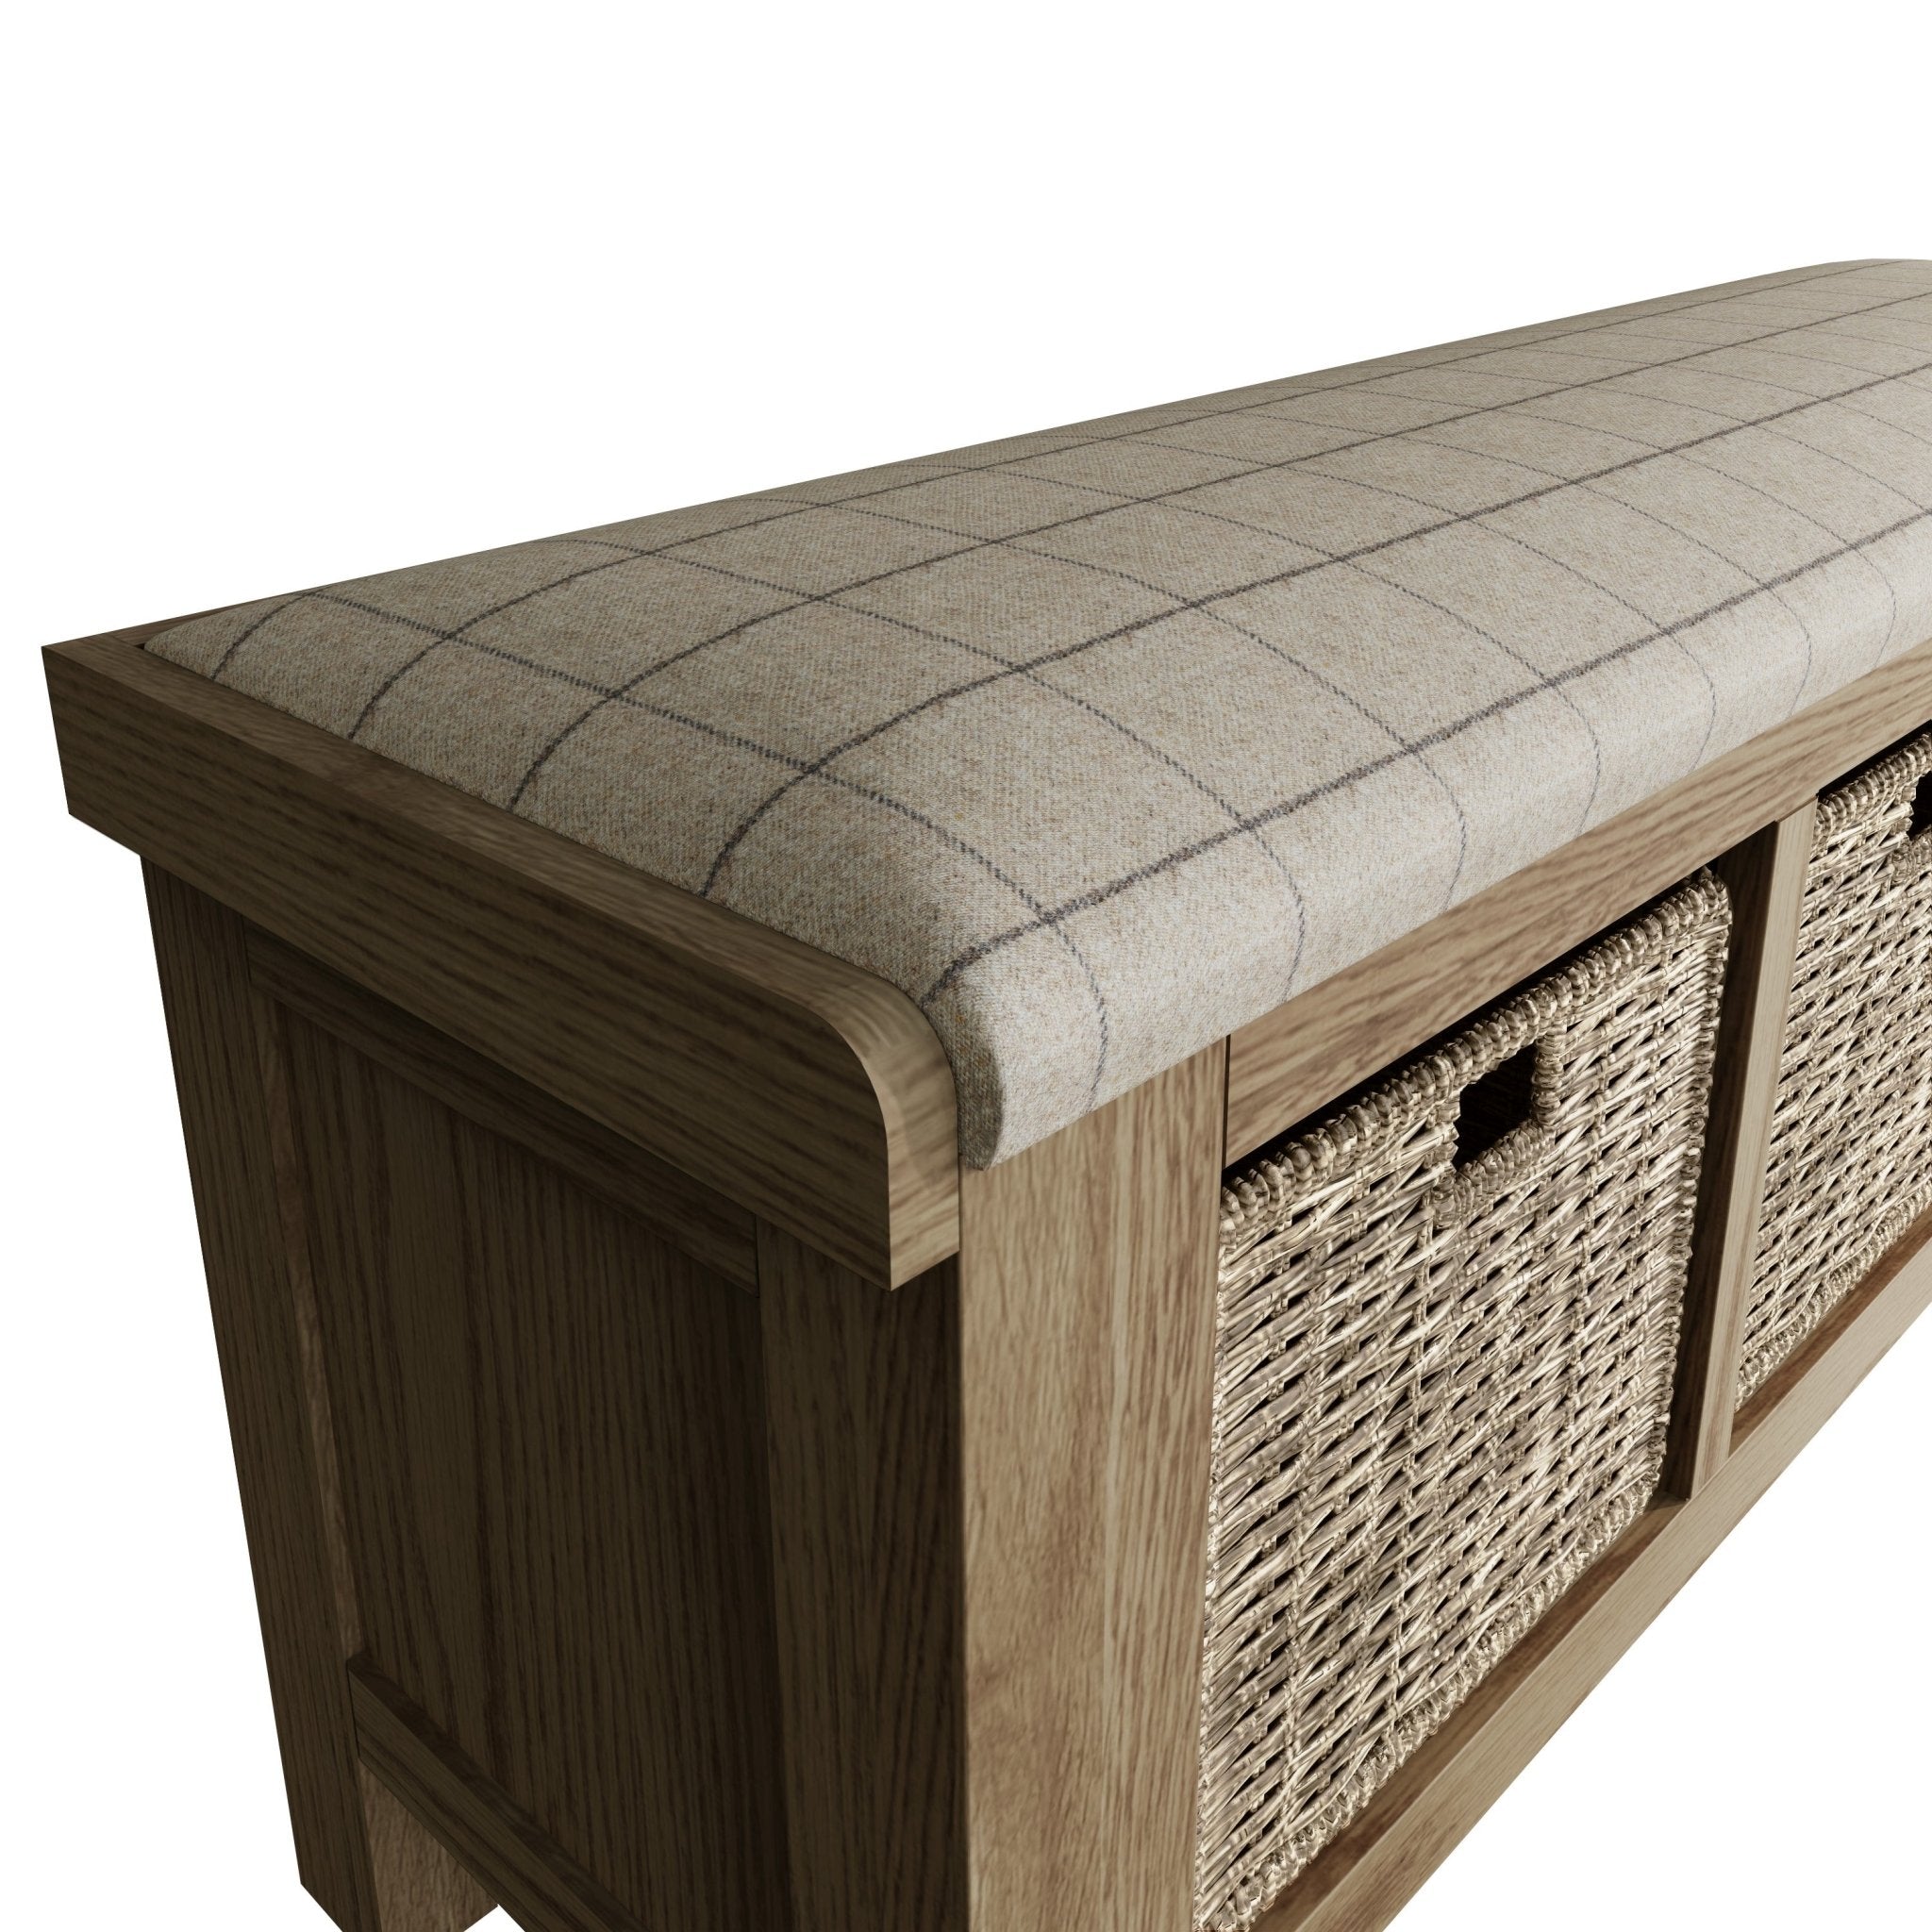 Rusper Oak 3 Basket Hall Storage Bench With Natural Check Seat - Duck Barn Interiors